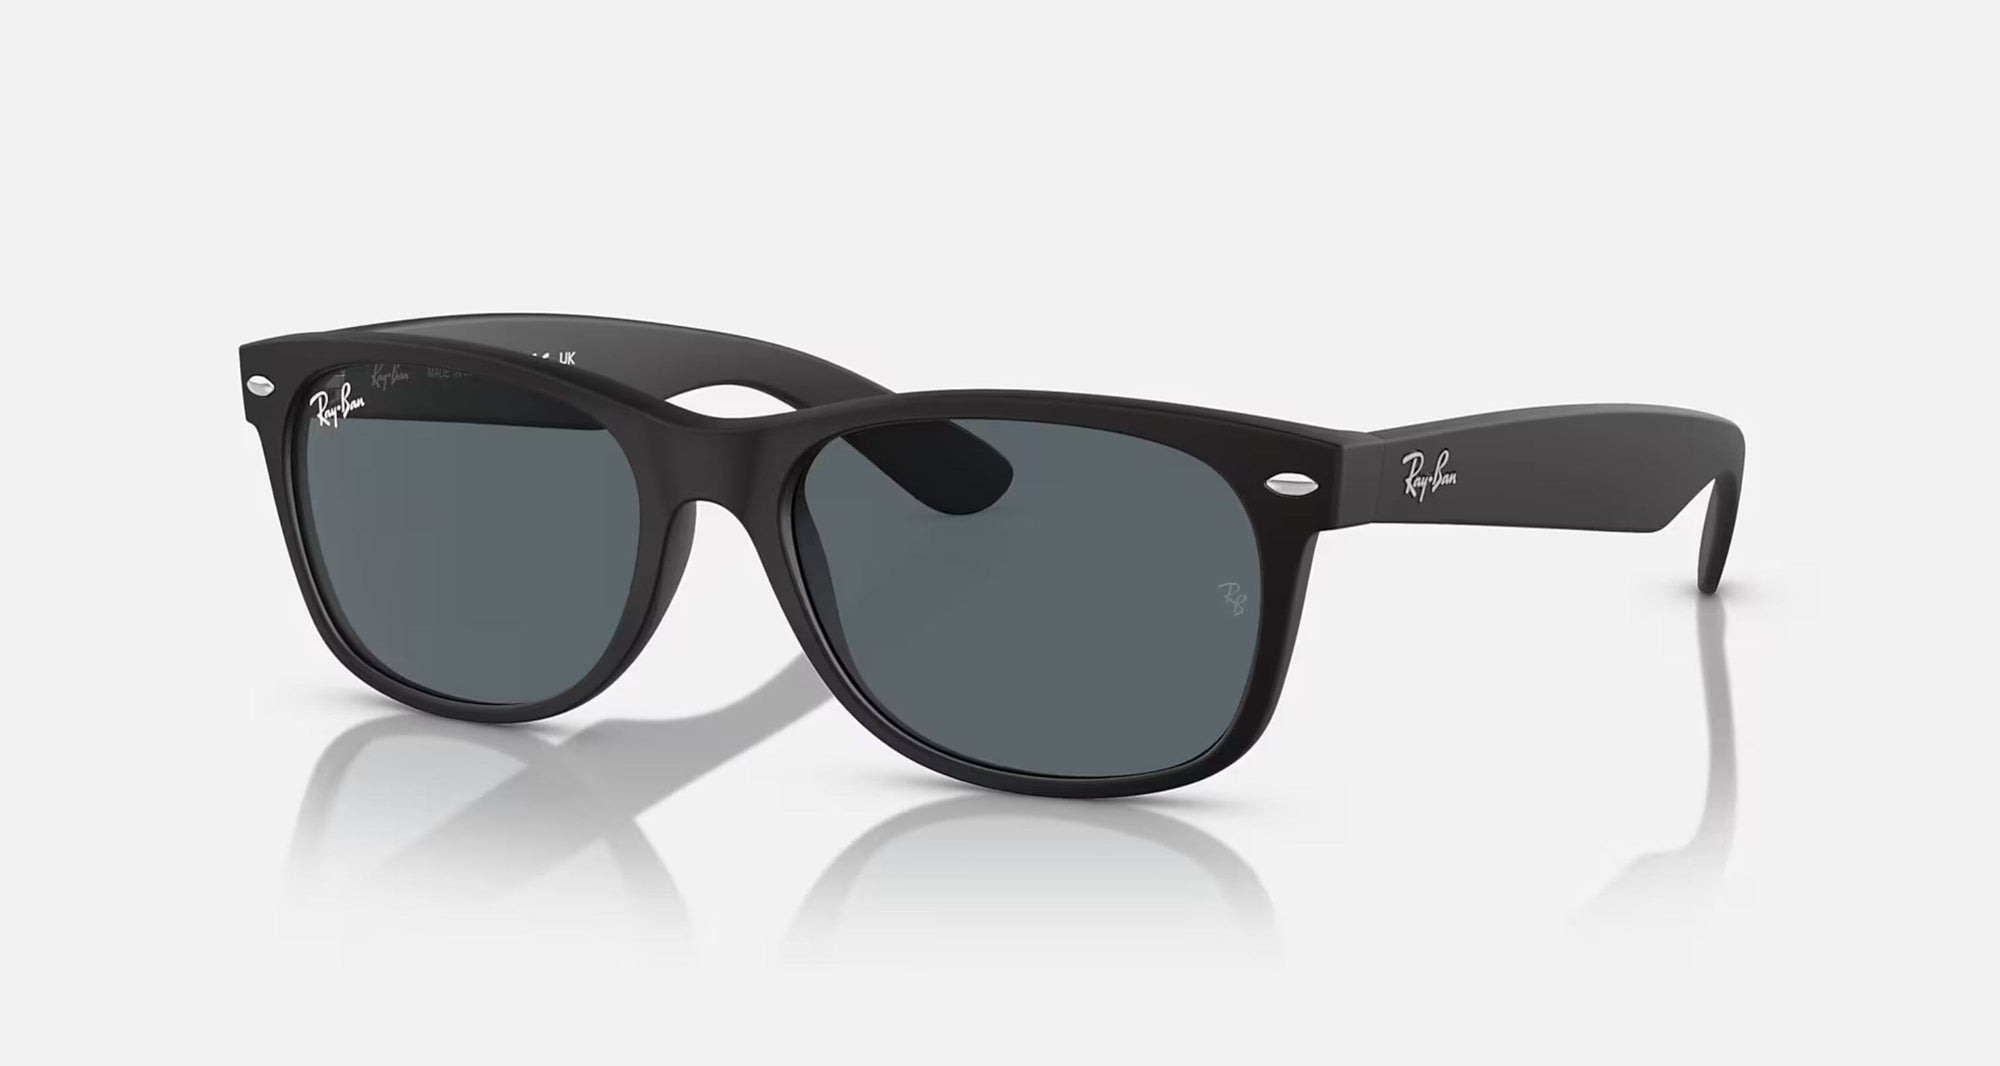 RAY-BAN New Wayfarer Classic Matte Black - Blue Sunglasses Sunglasses Ray-Ban 